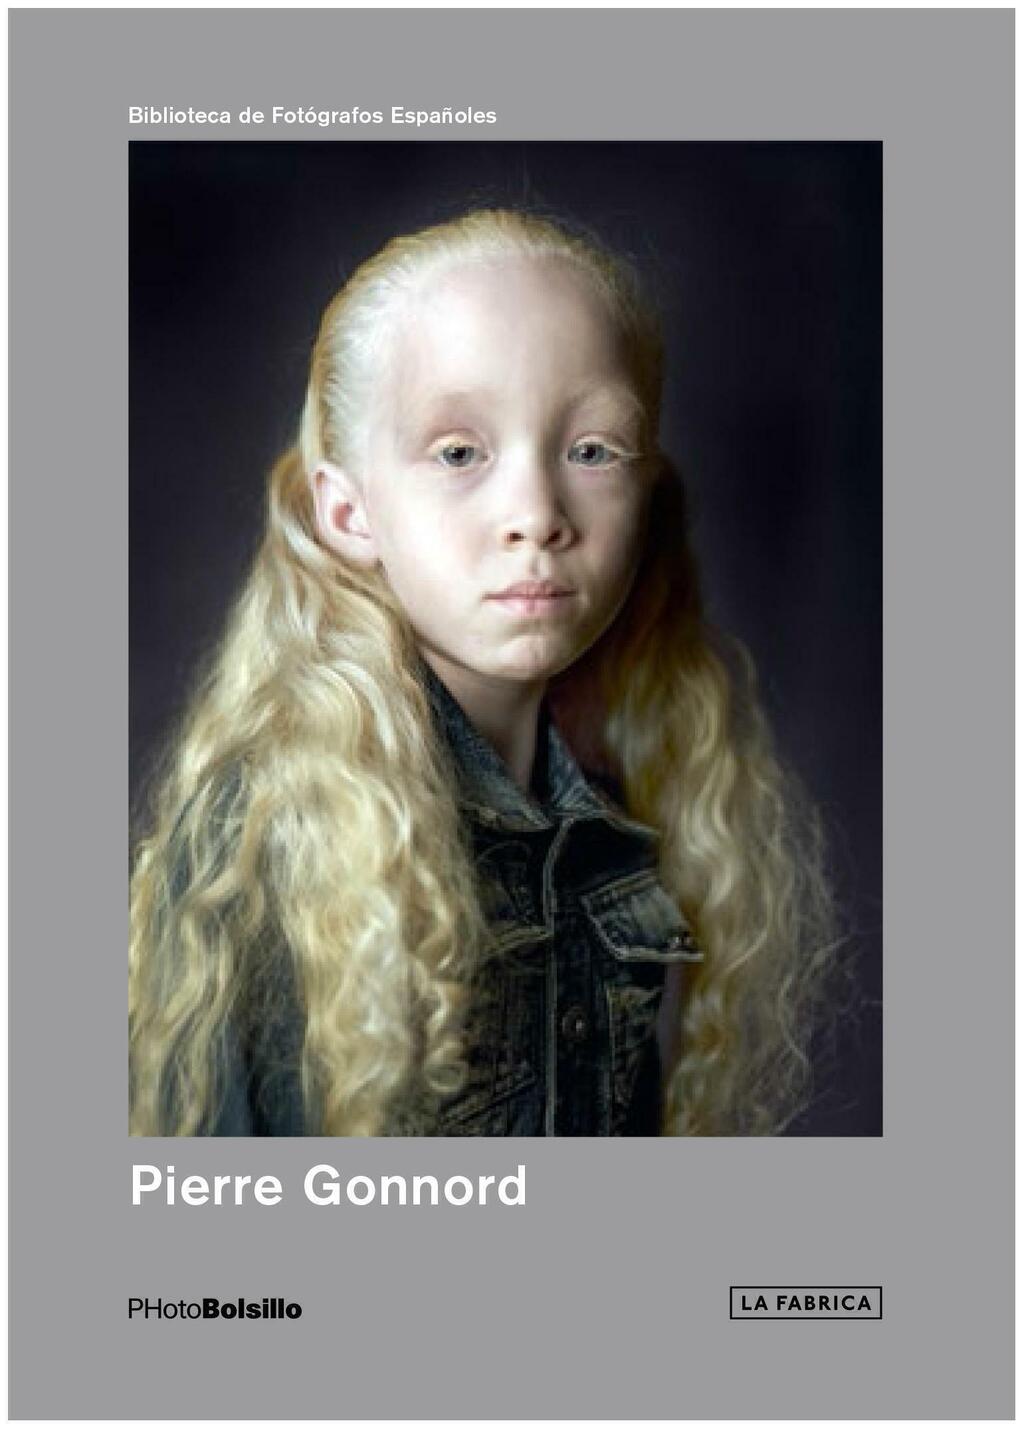 Pierre Gonnord - Pierre Gonnord - La fábrica